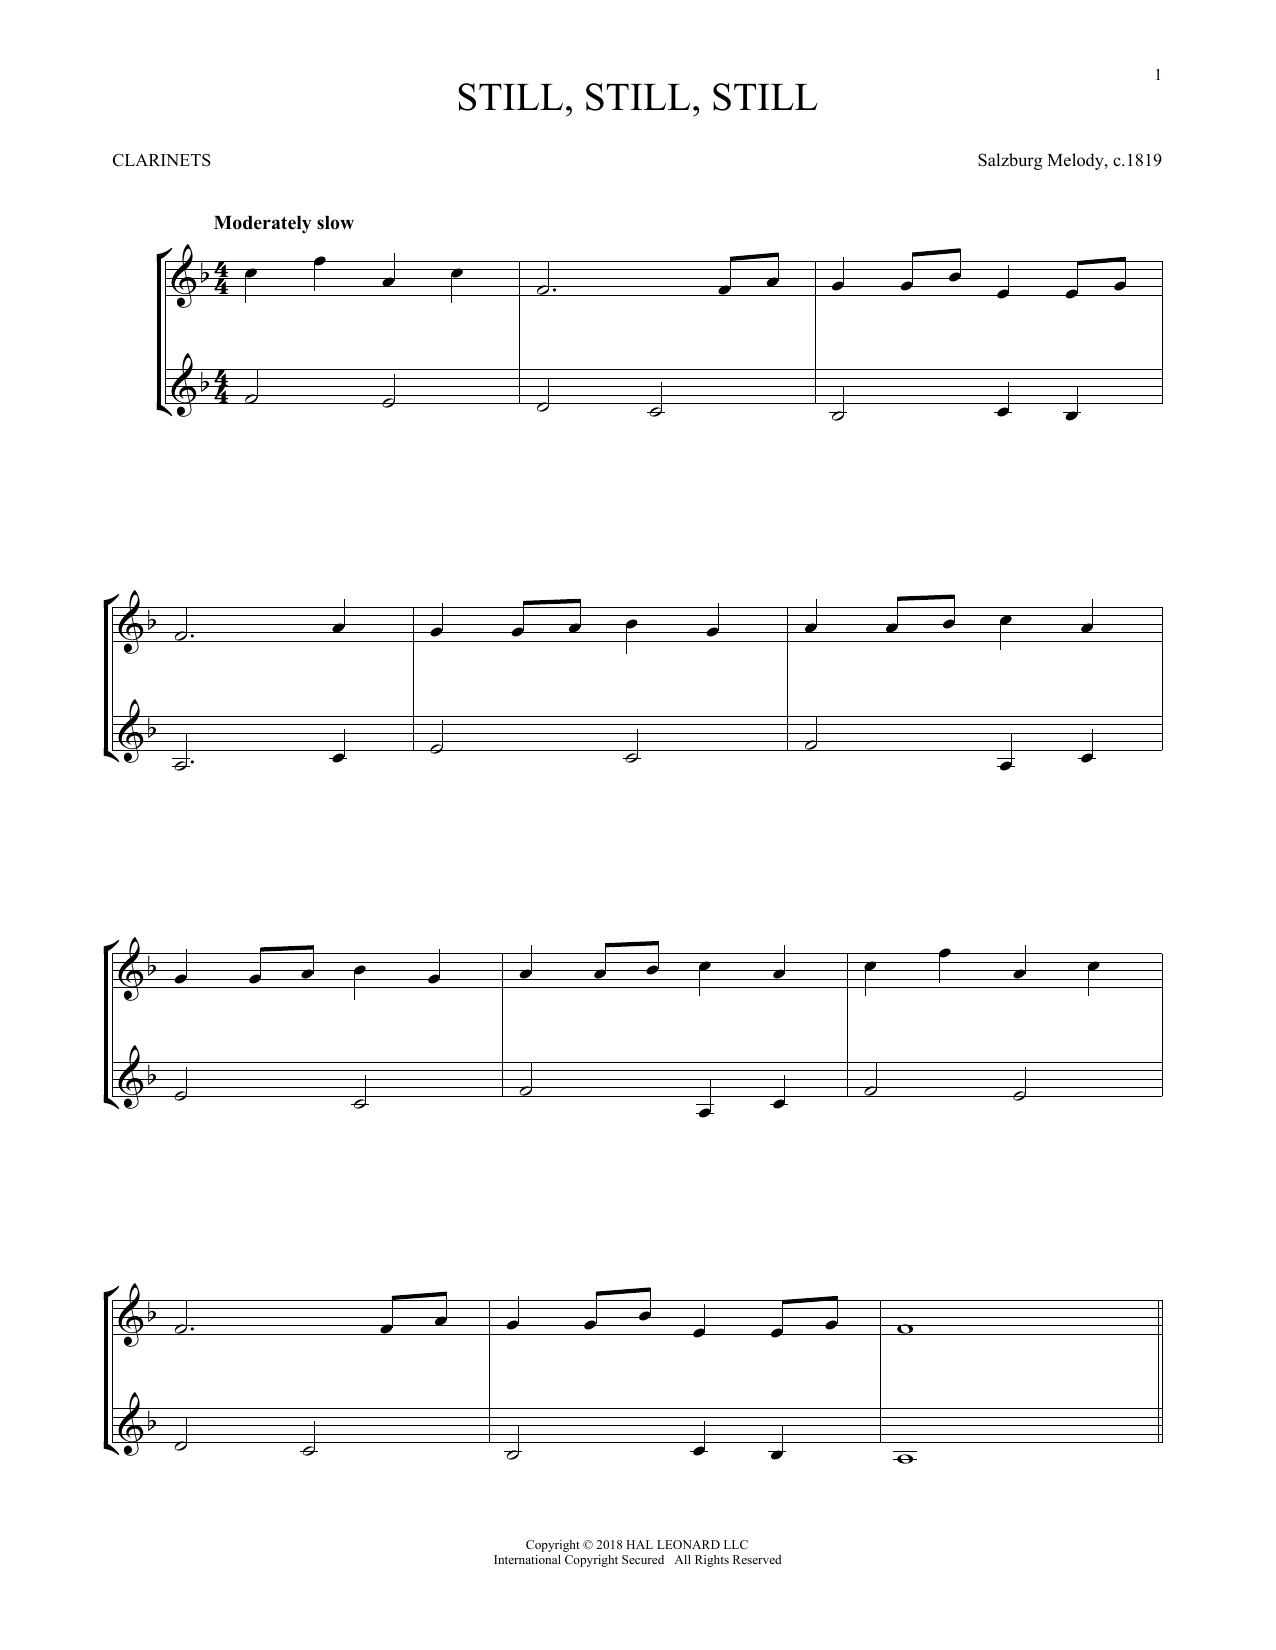 Still, Still, Still (Clarinet Duet) von Salzburg Melody, c.1819